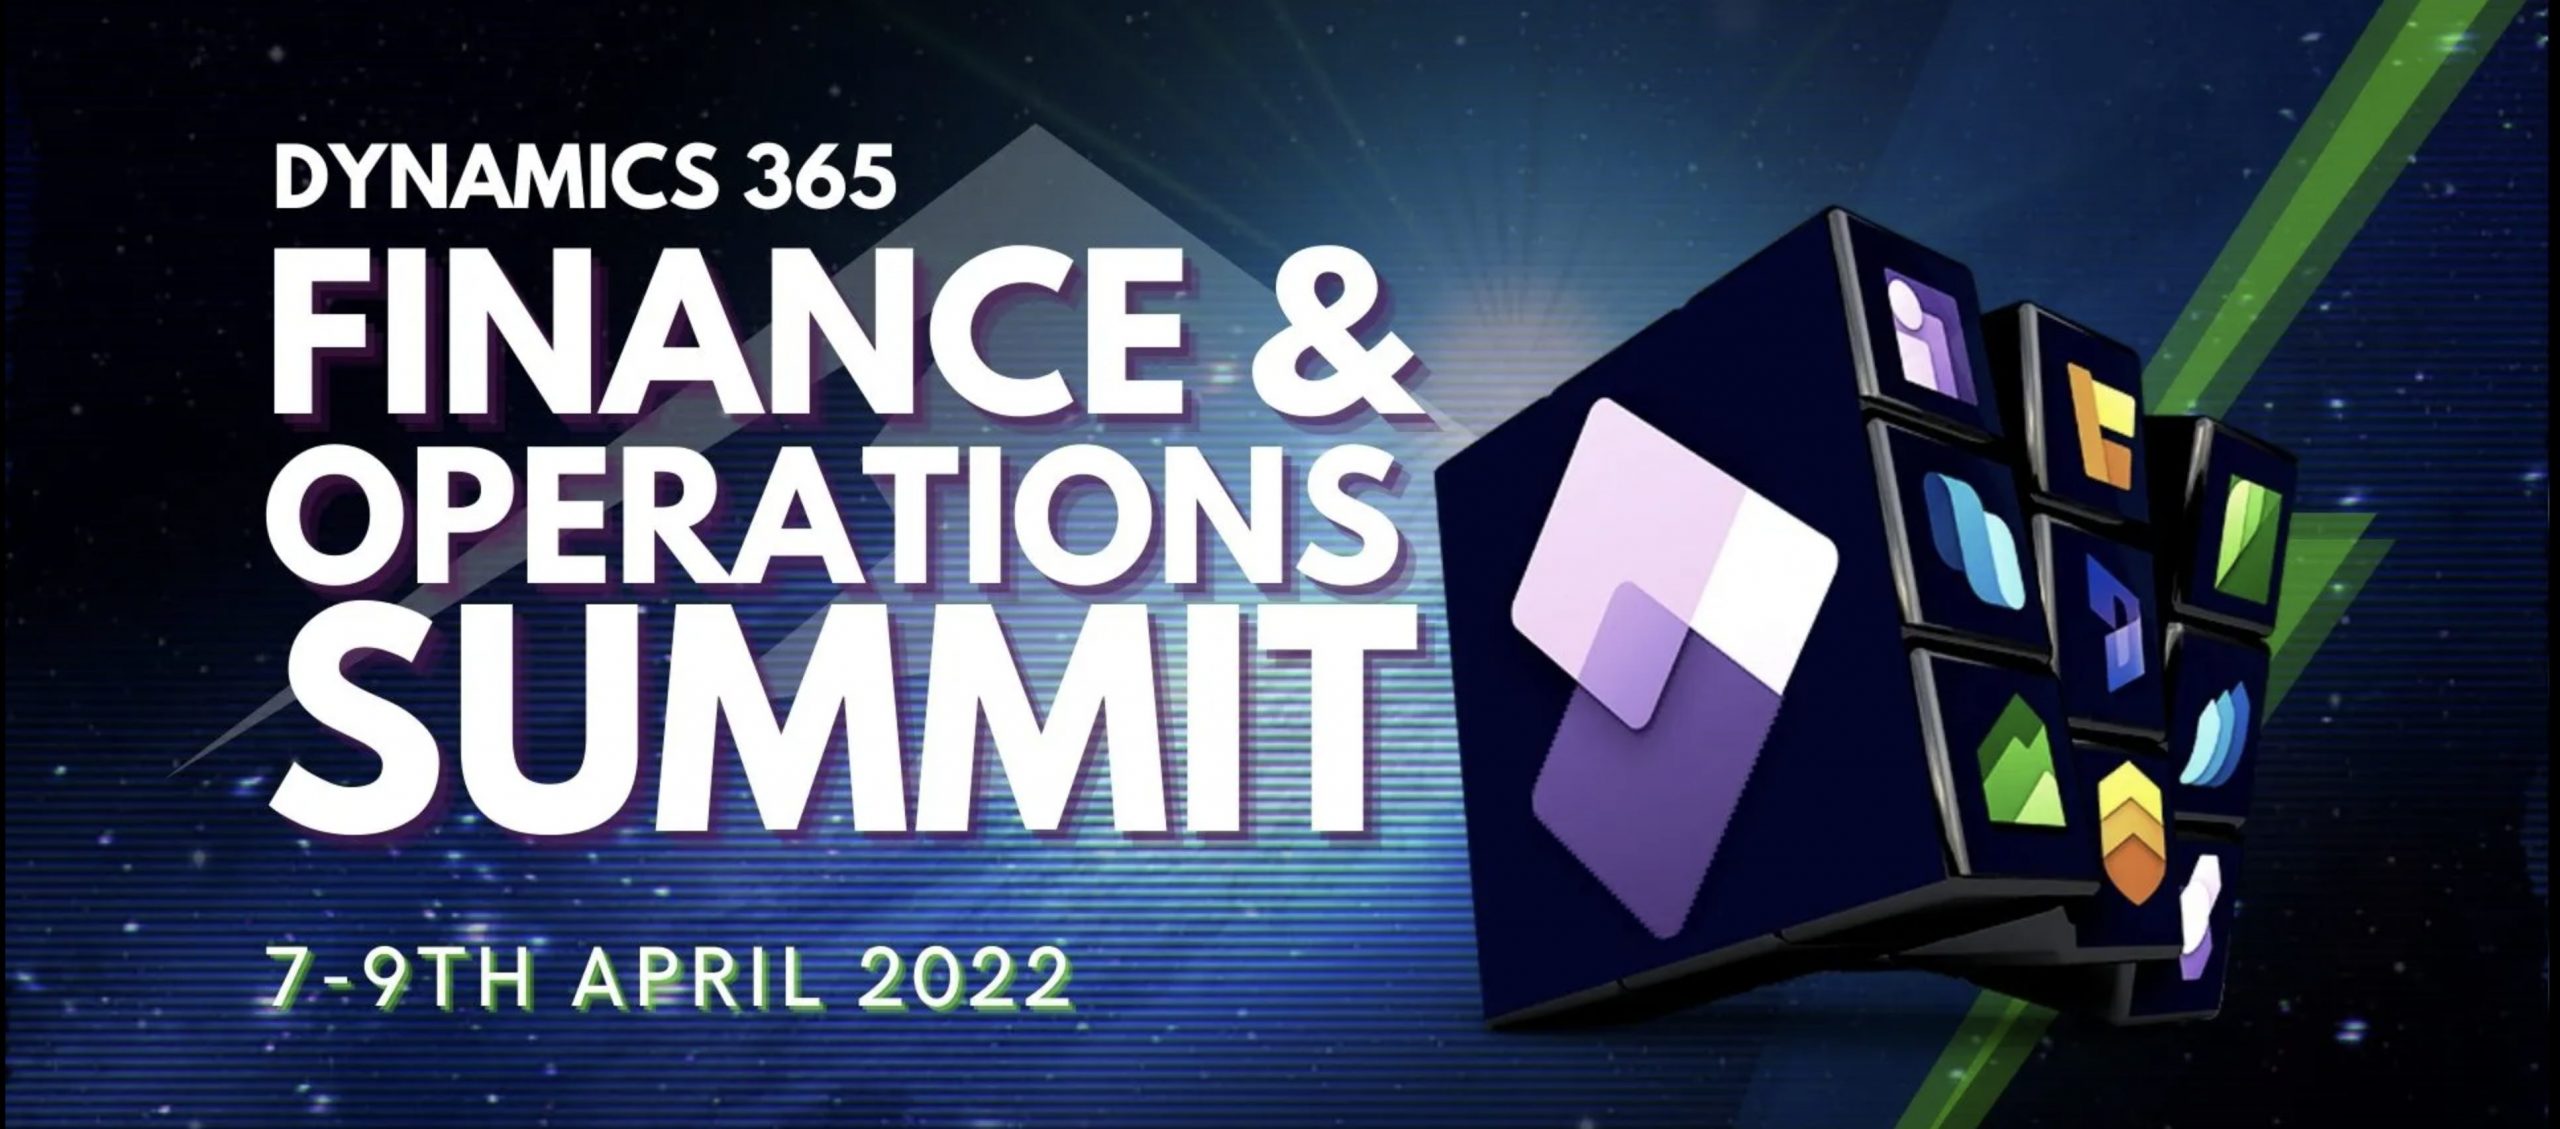 Dynamics 365 Finance Operations Summit 2022 Axazure